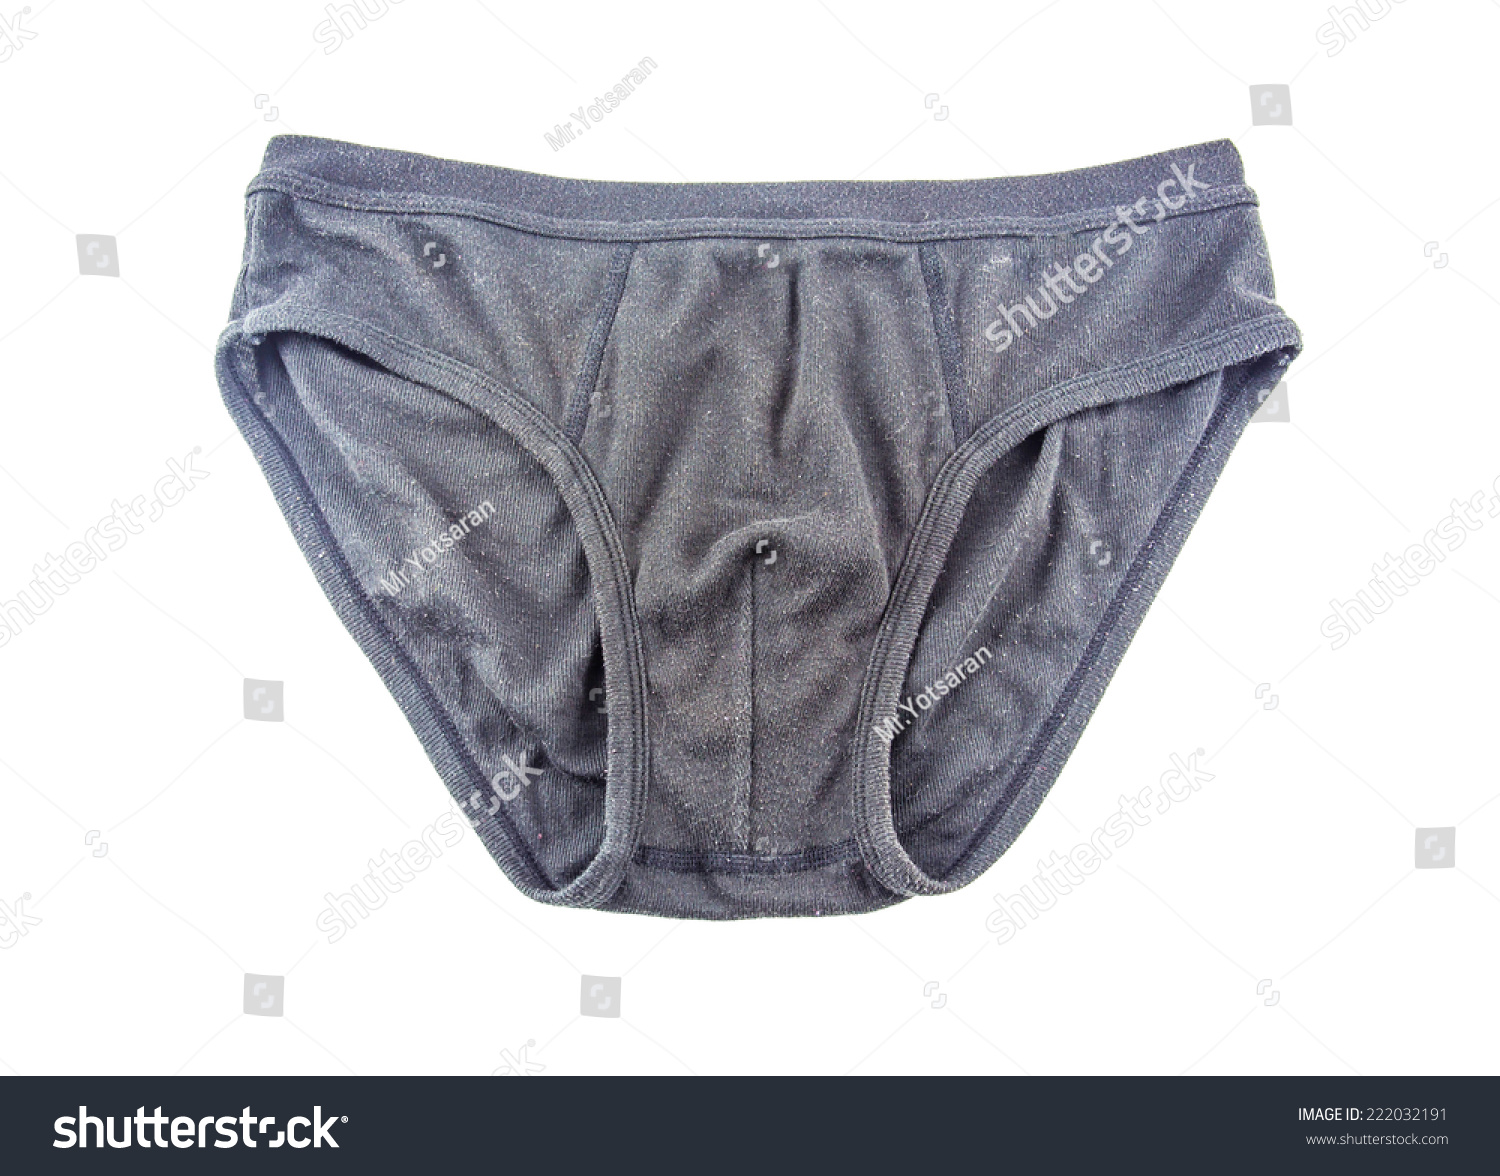 Old Dirty Underwear Stock Photo 222032191 : Shutterstock